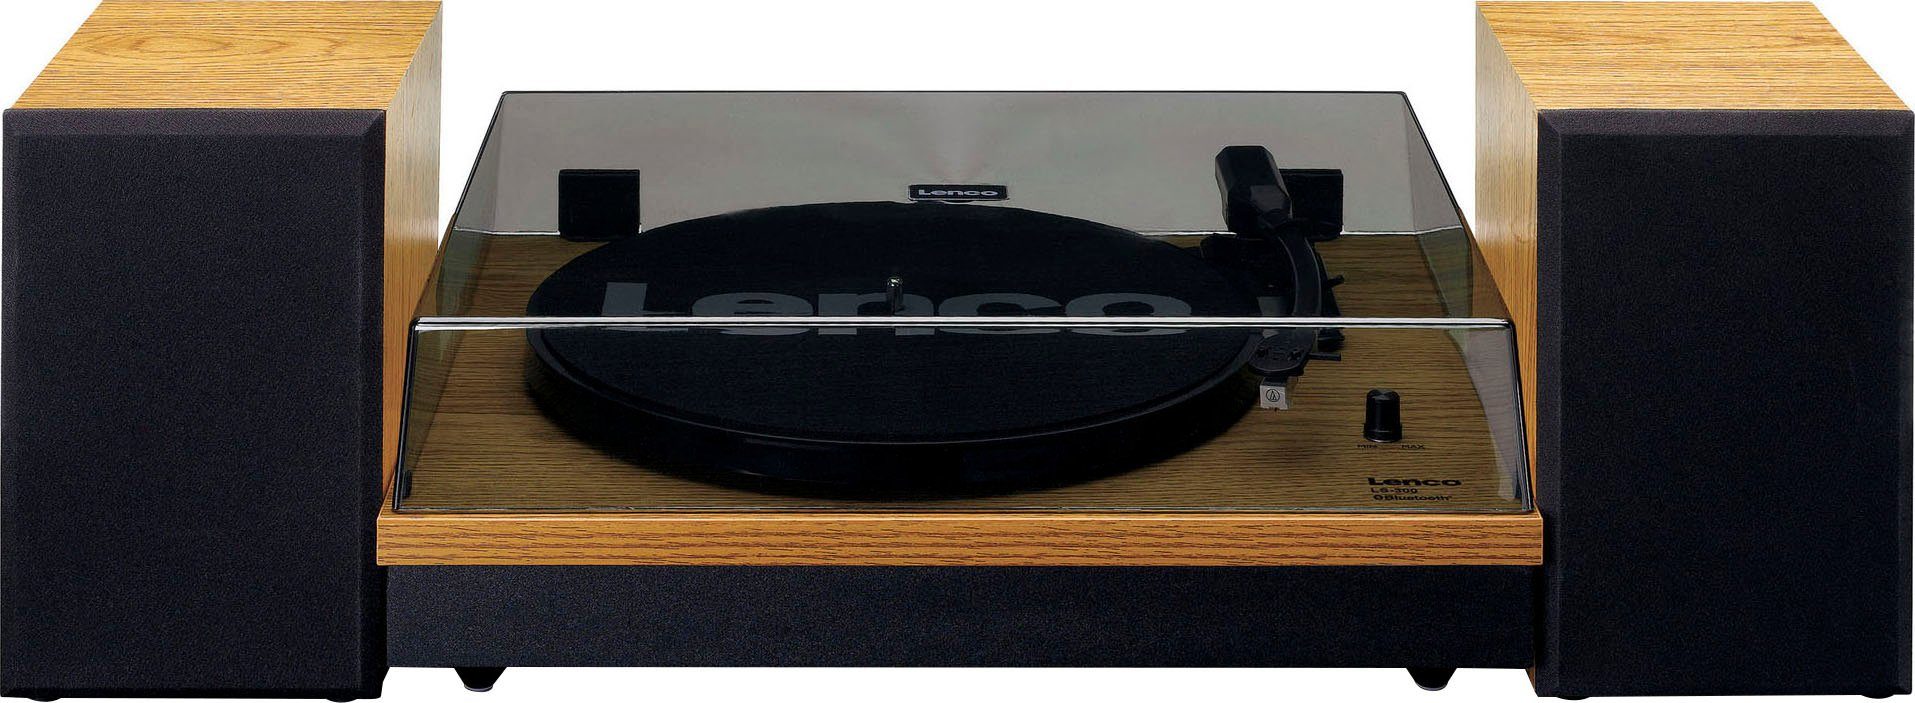 ext. (Riemenantrieb) Plattenspieler Lenco Holz Lautsprechern mit LS-300WD Plattenspieler